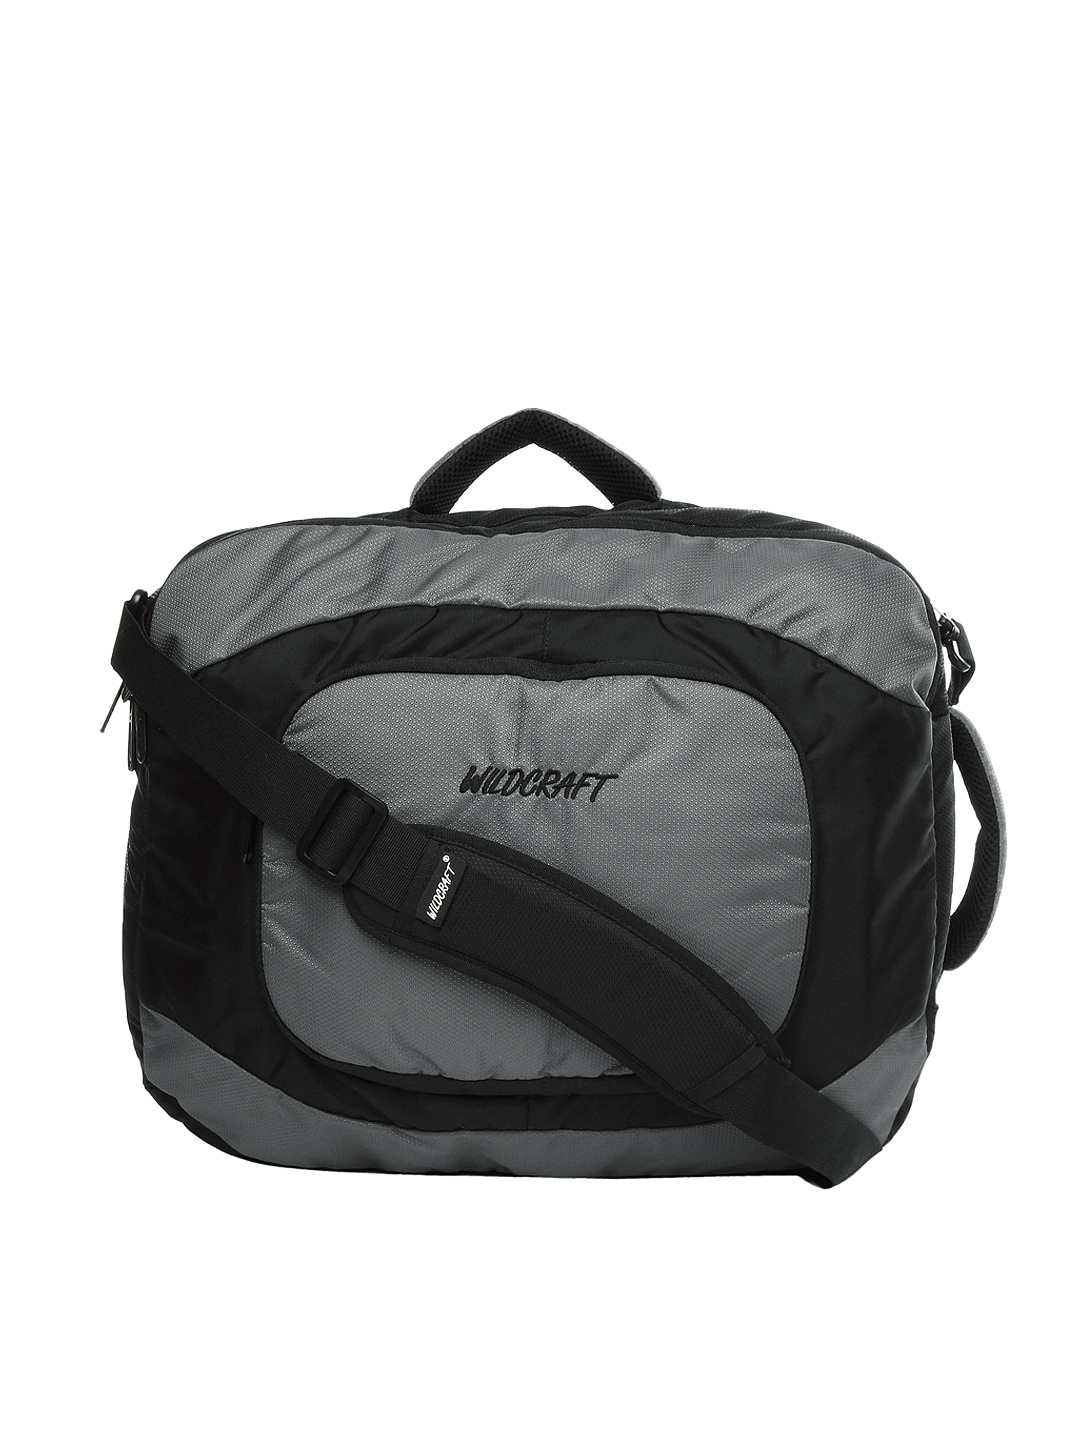 Wildcraft Unisex Black & Grey Laptop Bag cum Backpack